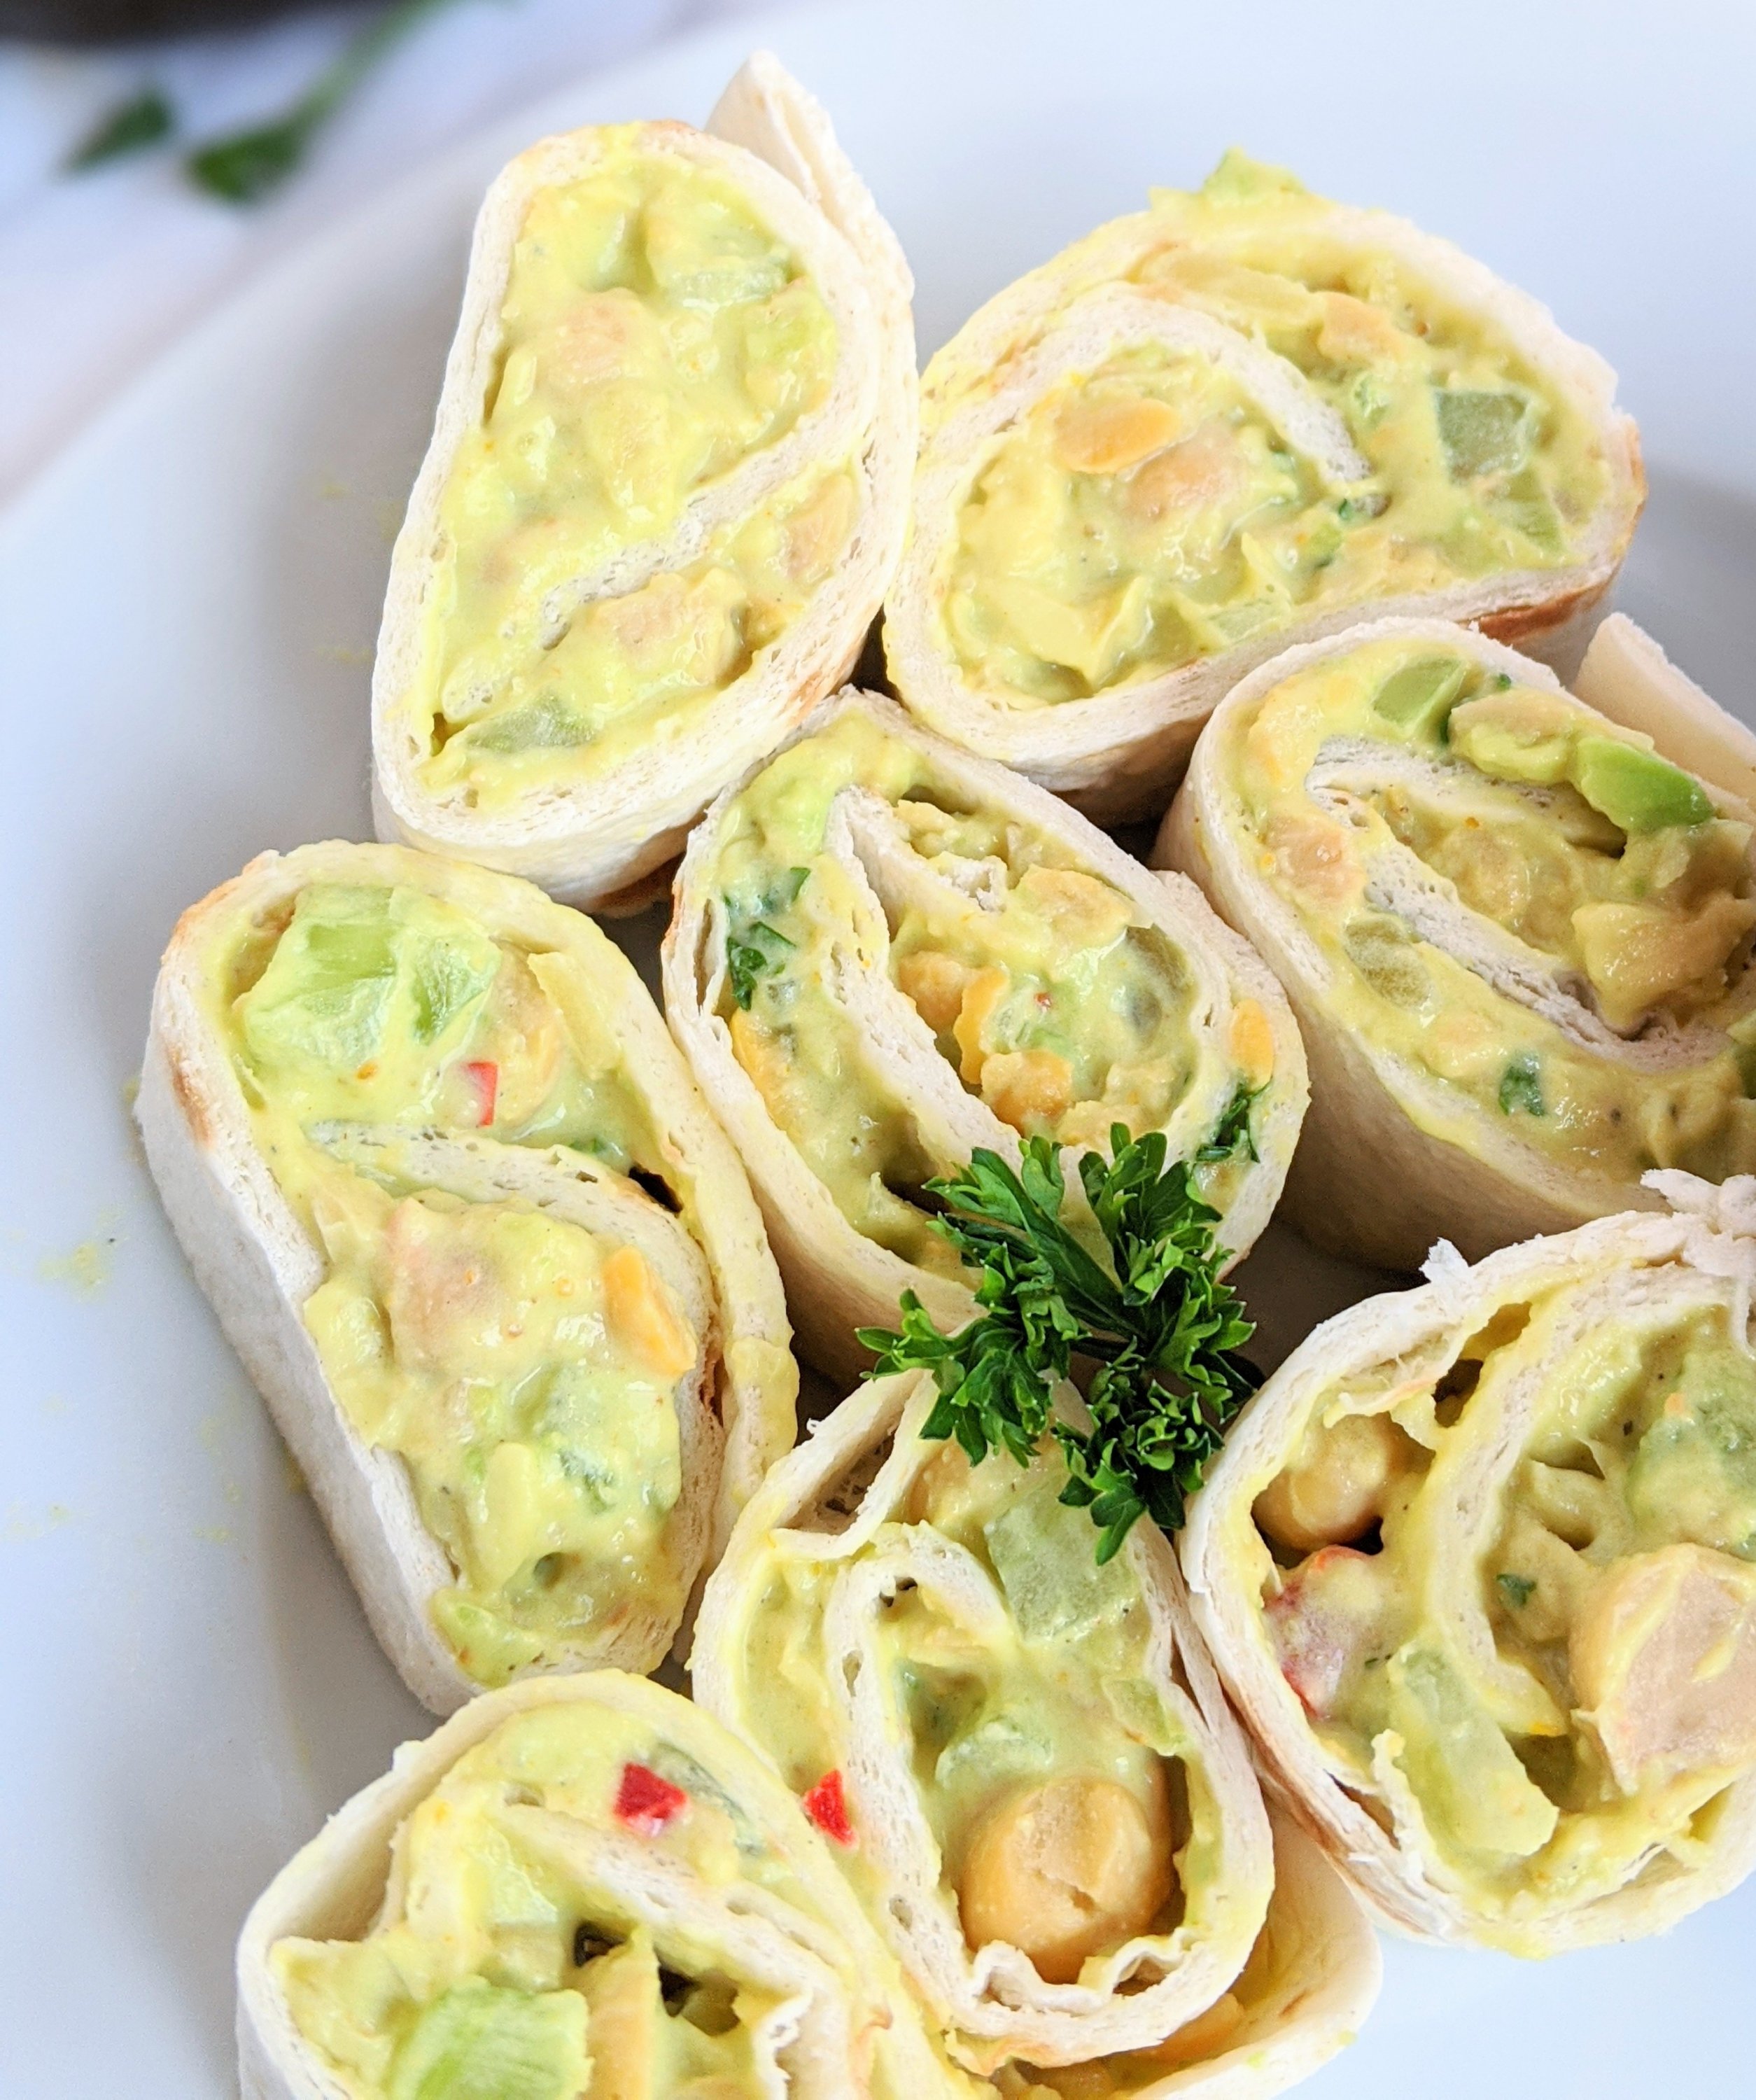 avocado pinwheel sandwiches with chickpeas and mayo vegan gluten free vegetarian